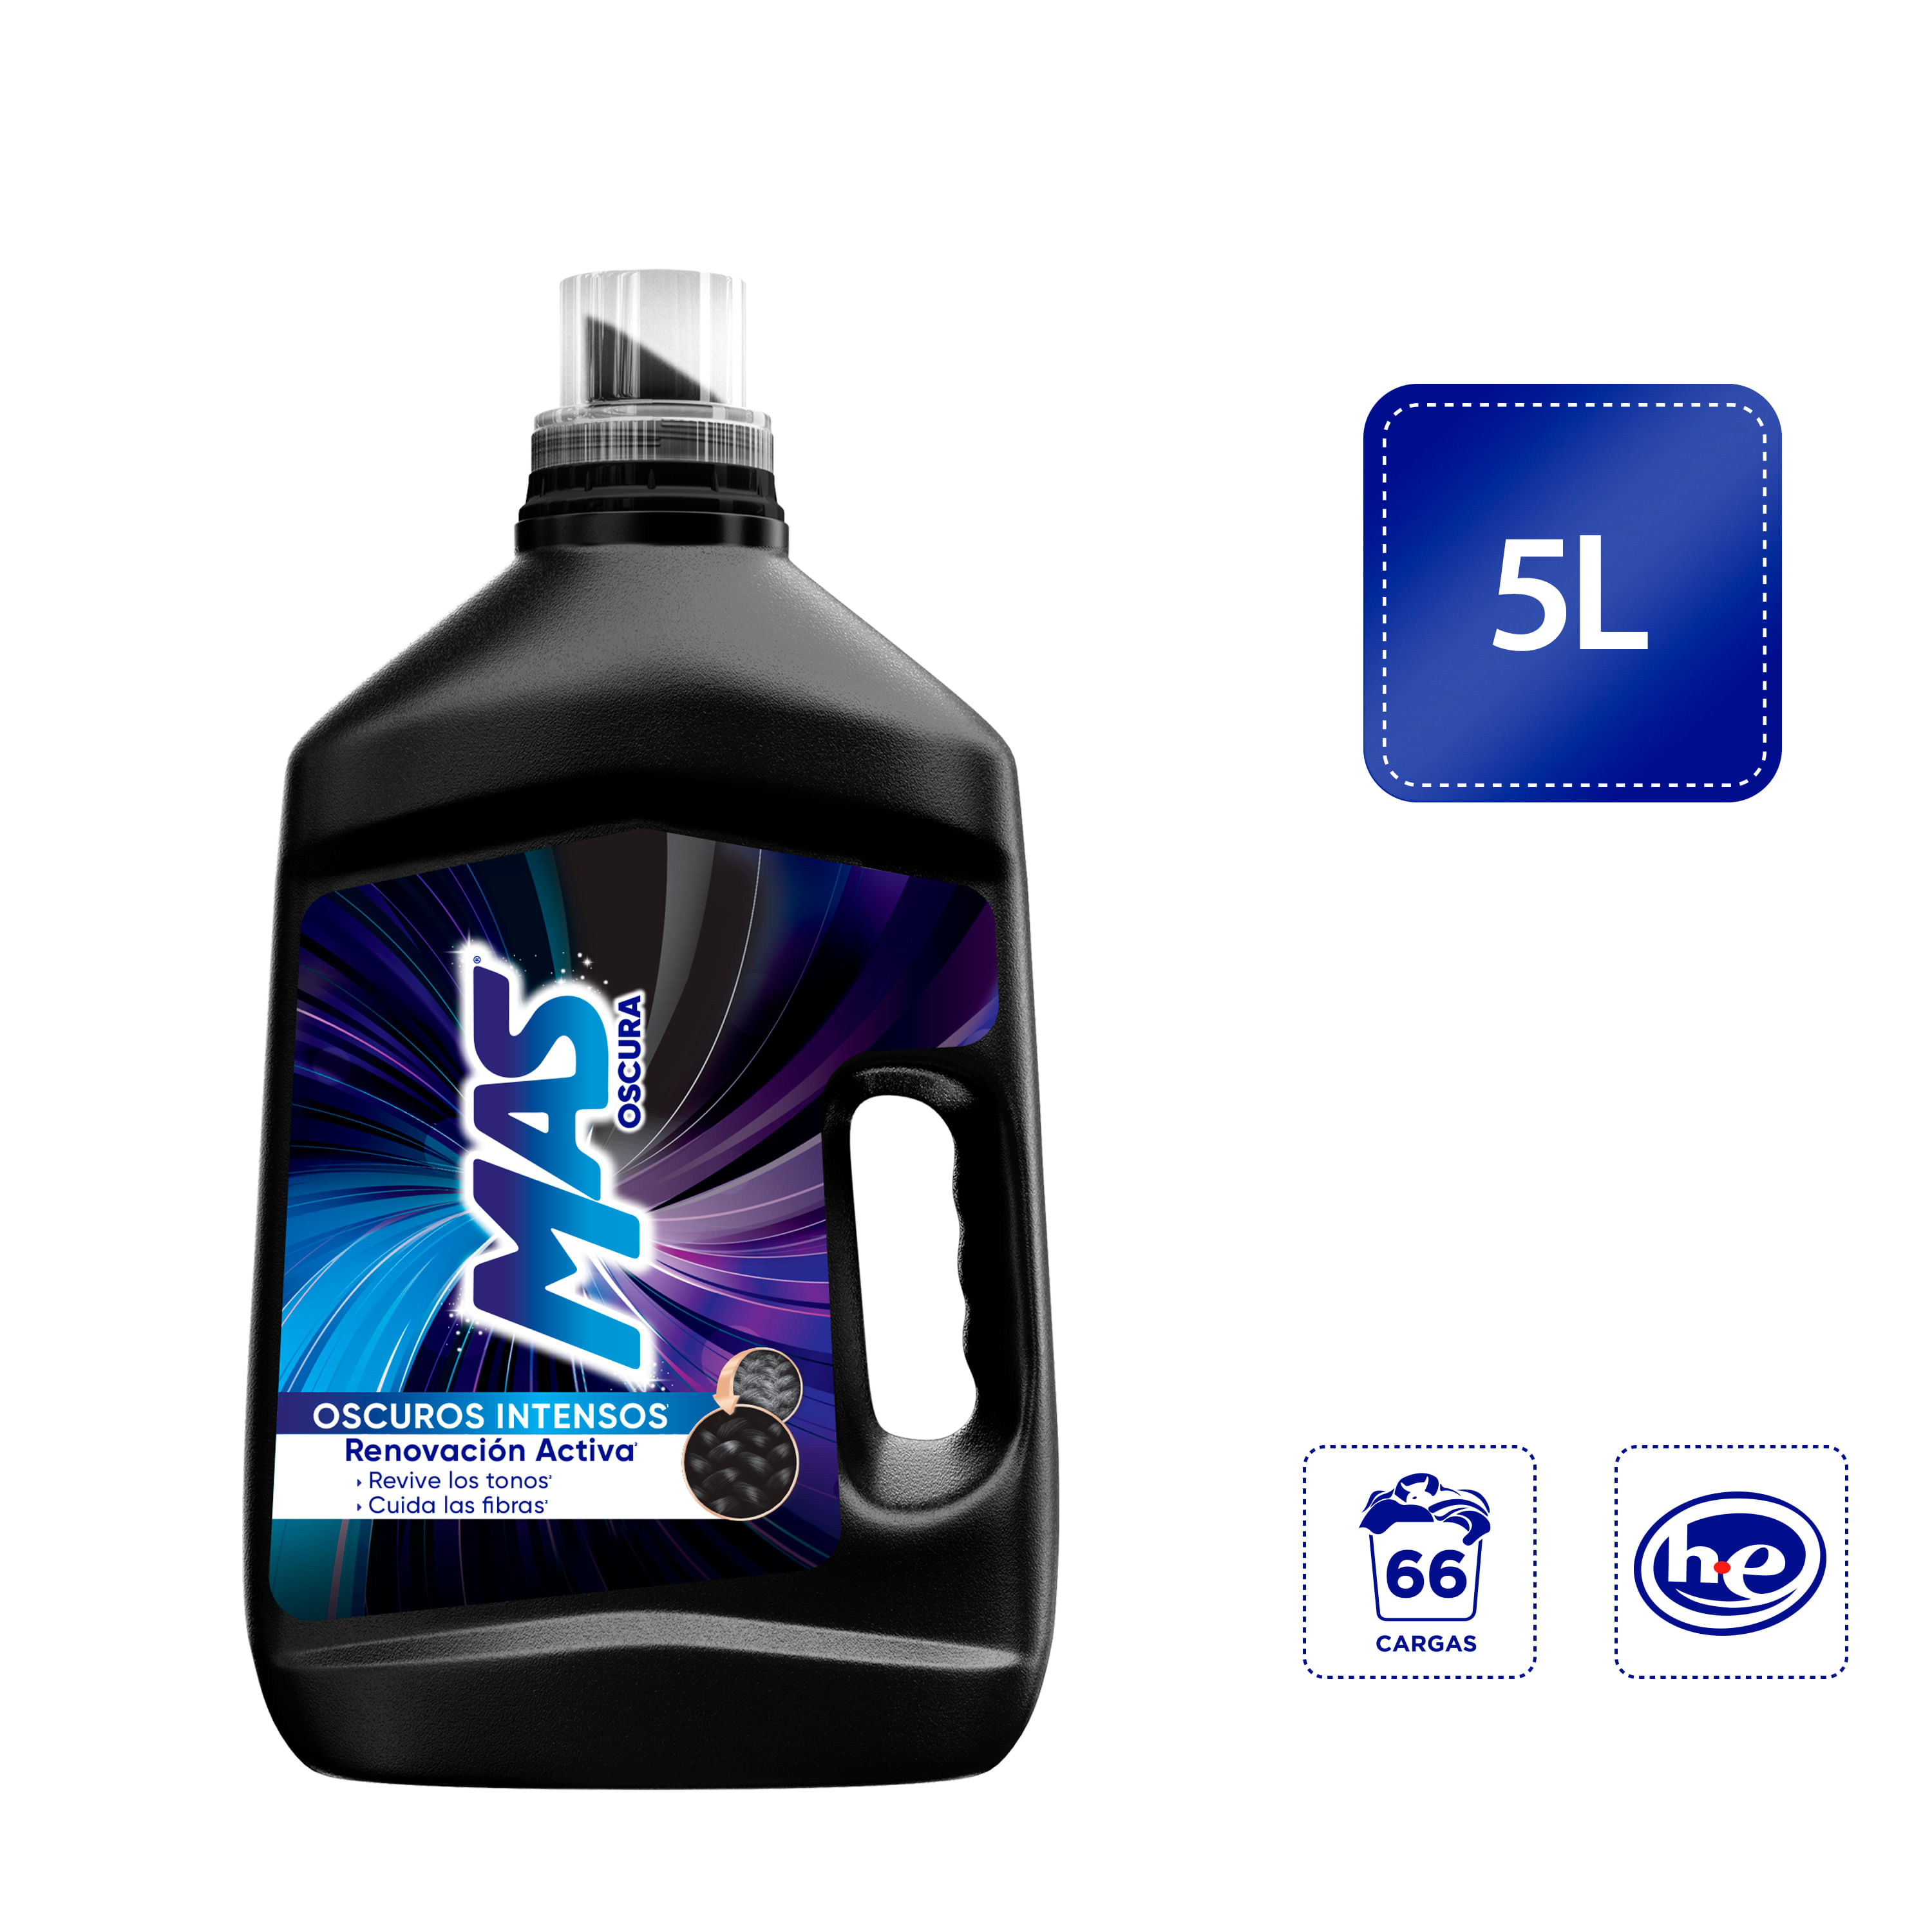 Comprar Detergente Líquido MAS Oscura -5Lt | Walmart Costa Rica